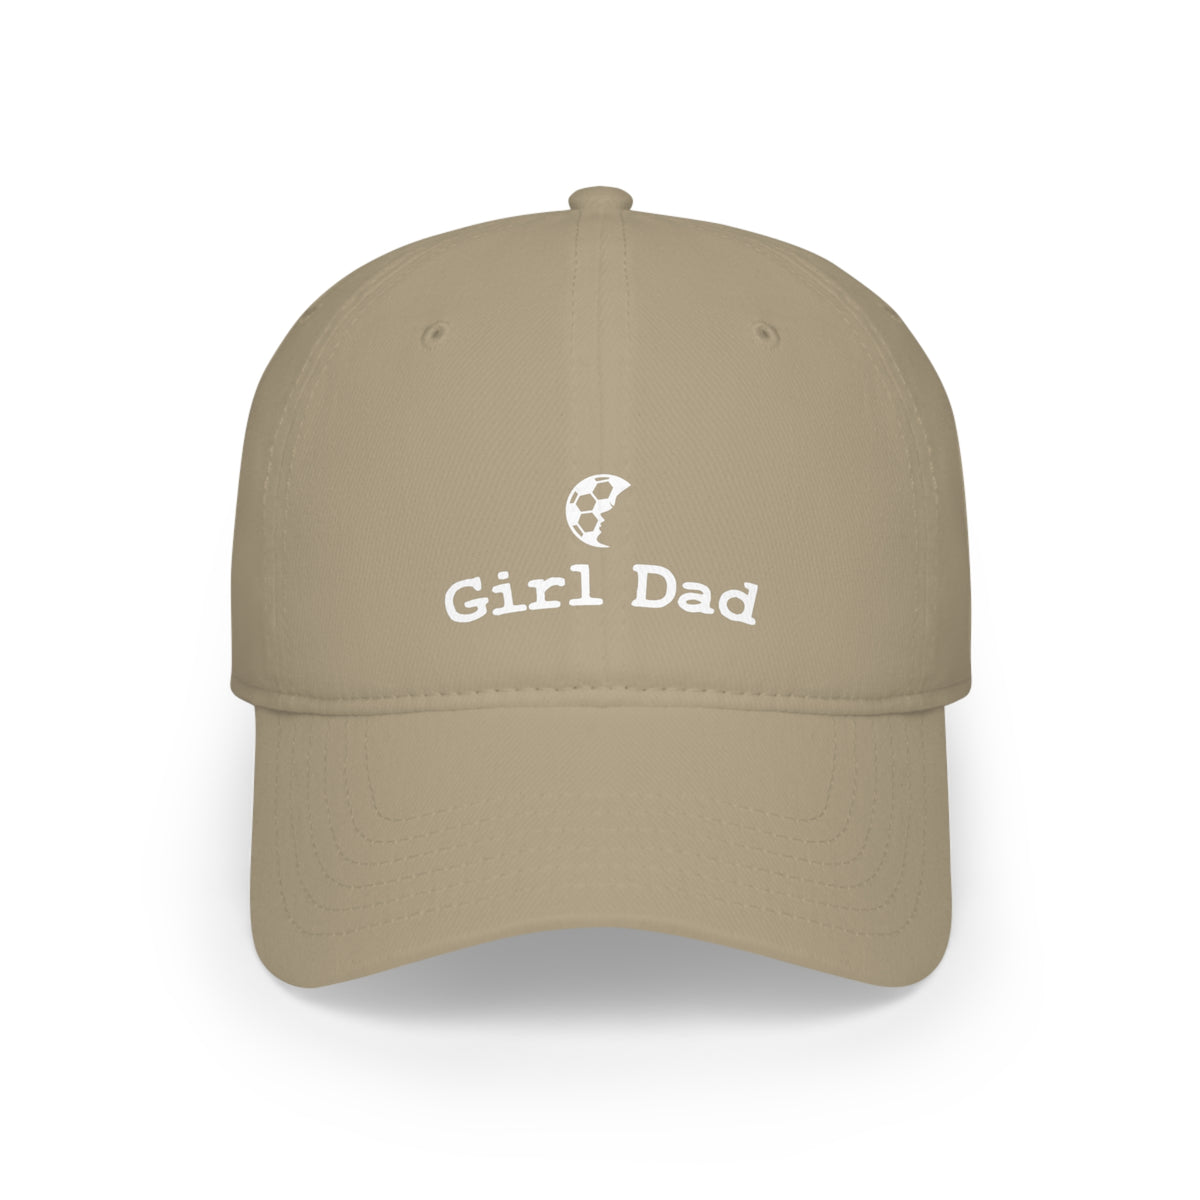 Girl Dad Unisex Hat